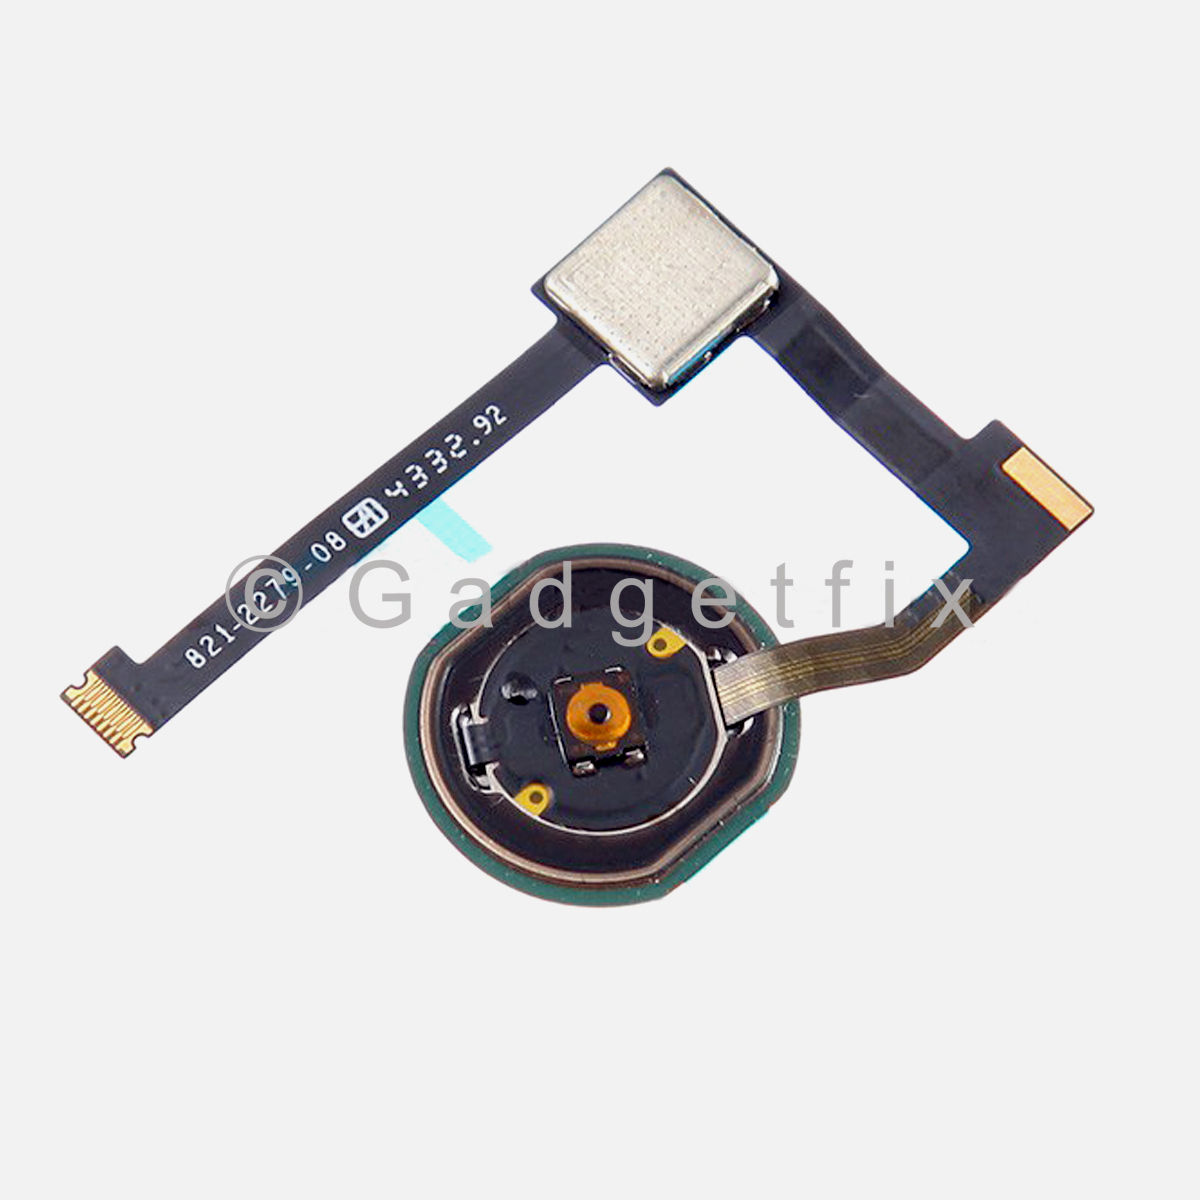 Black Home Menu Button Flex Cable Replacement Part for iPad Air 2 A1566 A1567